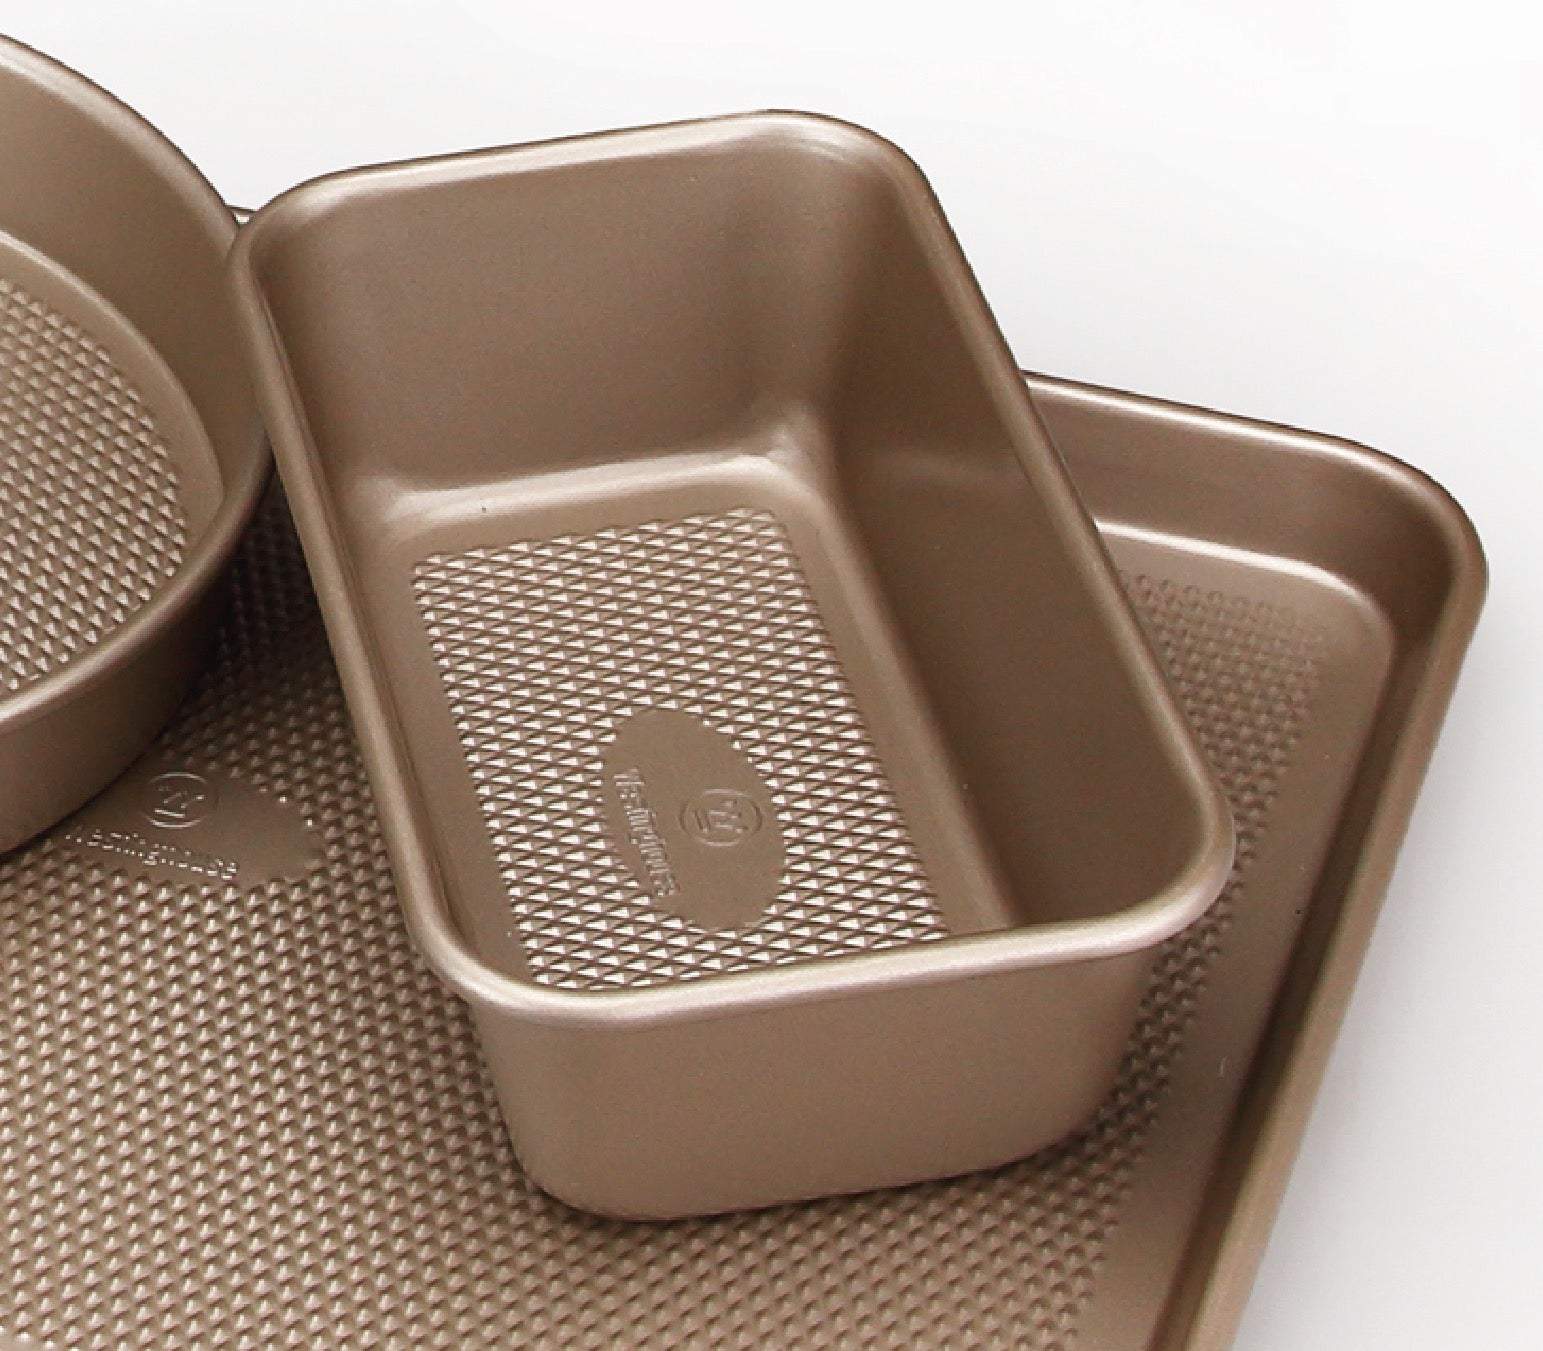 WESTINGHOUSE Carbon Steel Baking Pan Set, 3-pc (Squre Pan, Muffin Pan +  Rectangle Deep Tray)